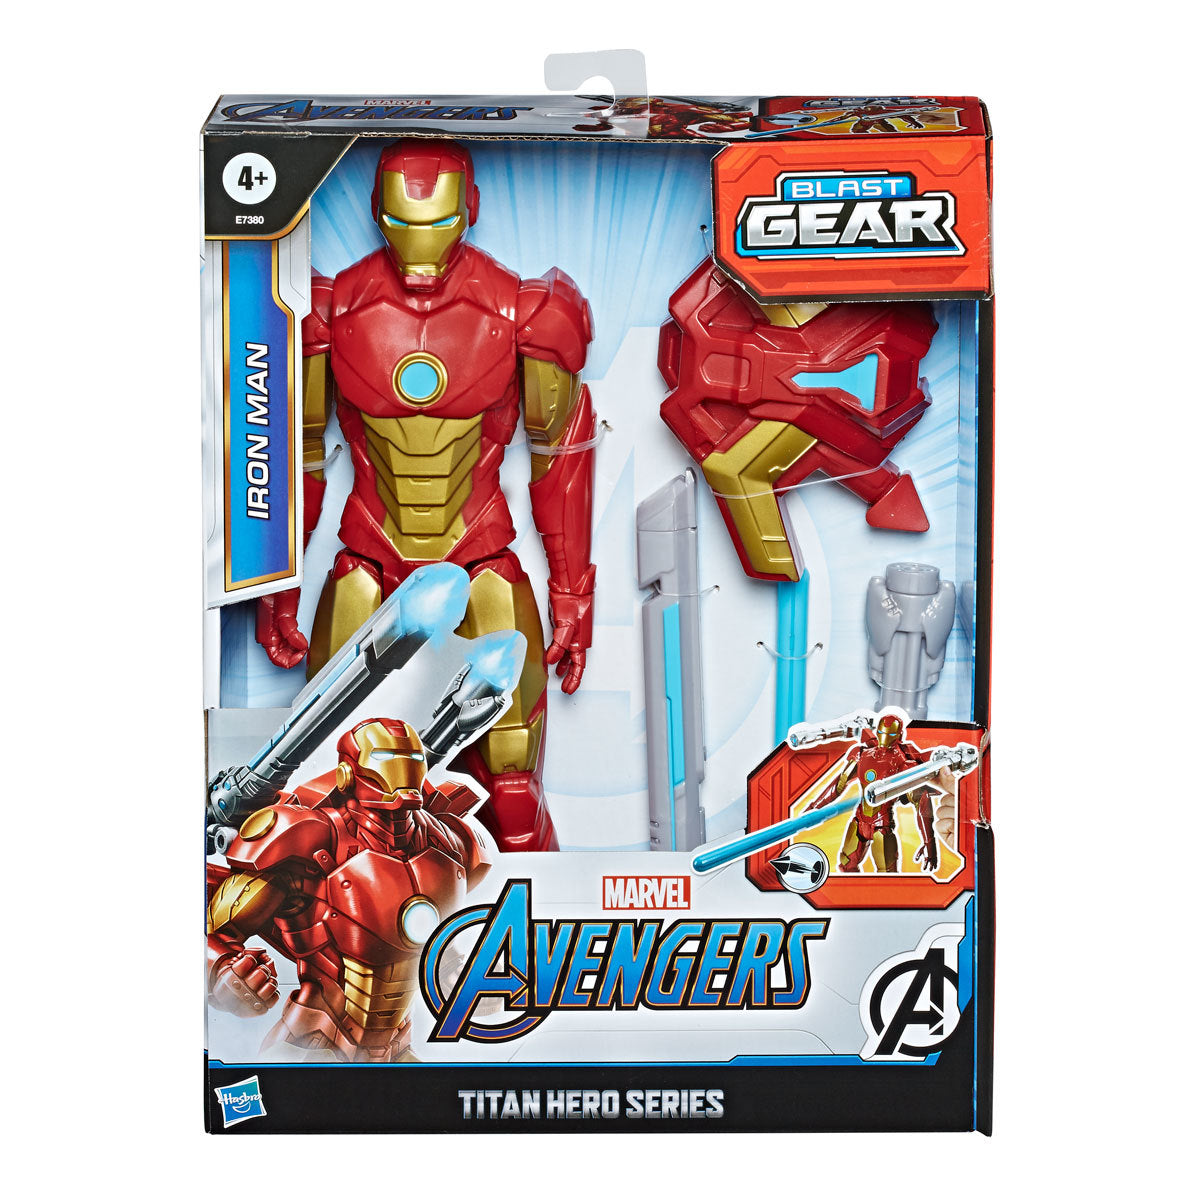 Marvel Avengers Titan Hero Series Blast Gear Figure - Iron Man